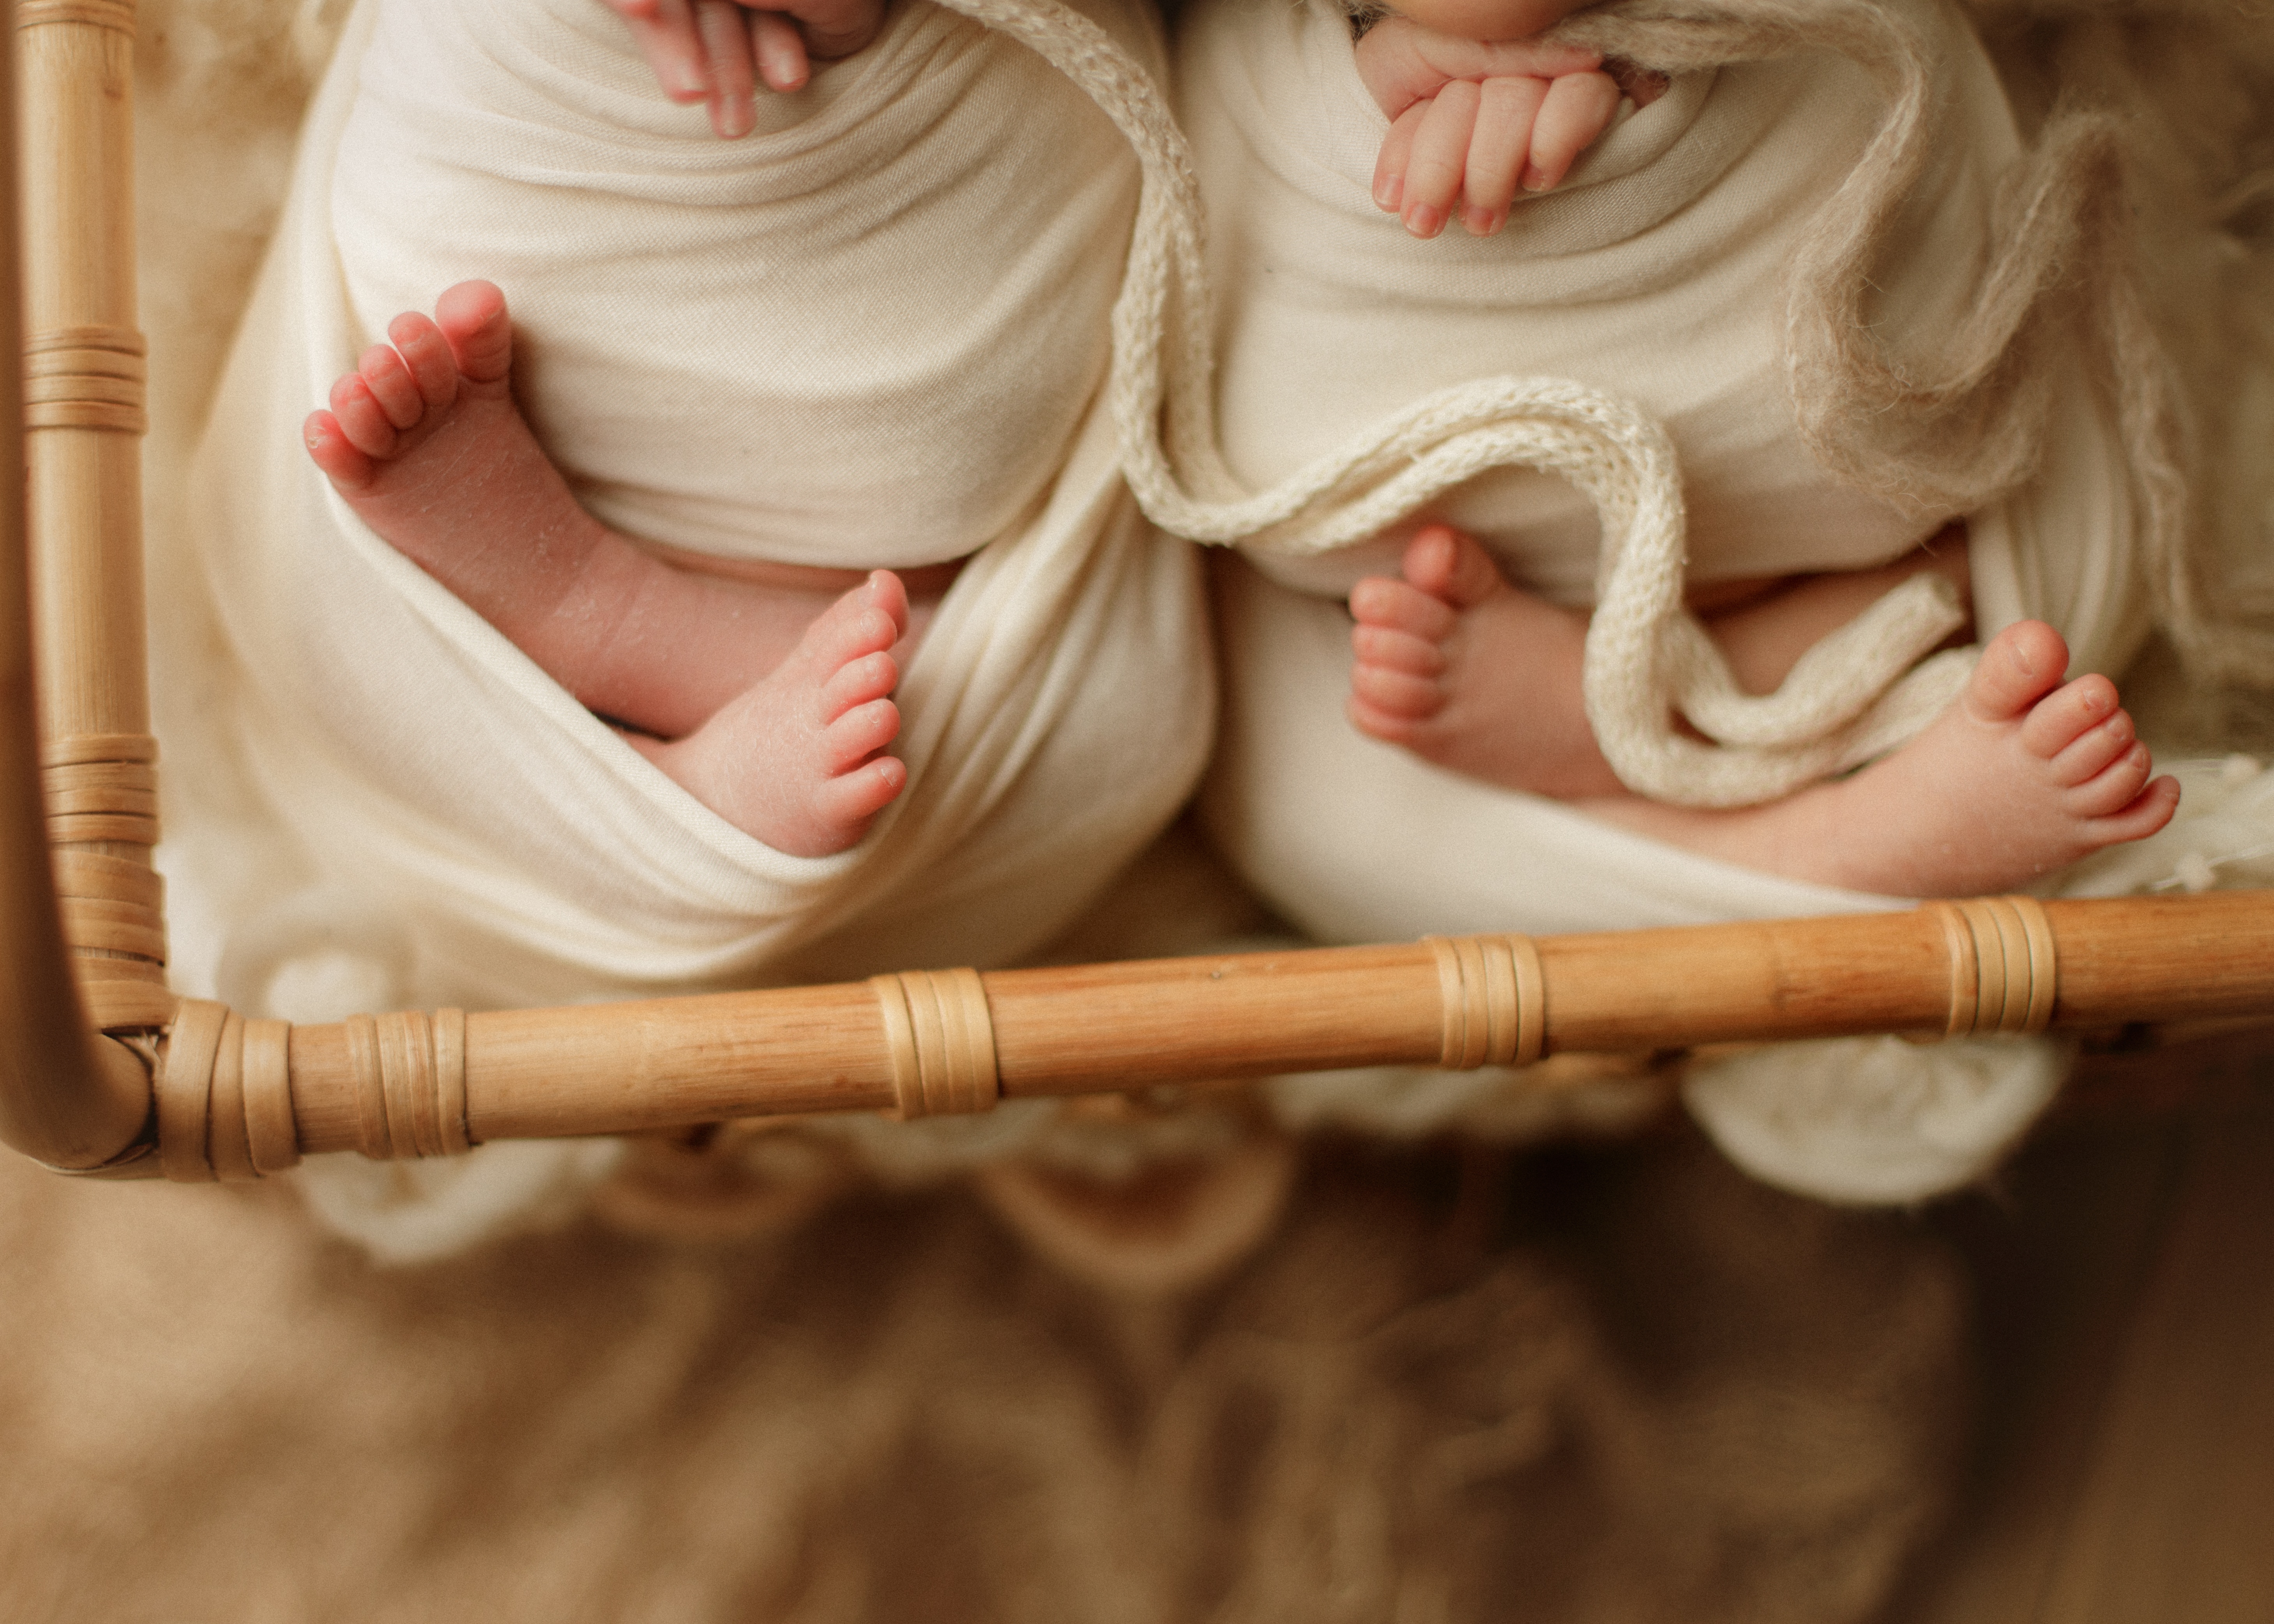 newborn twin baby feet